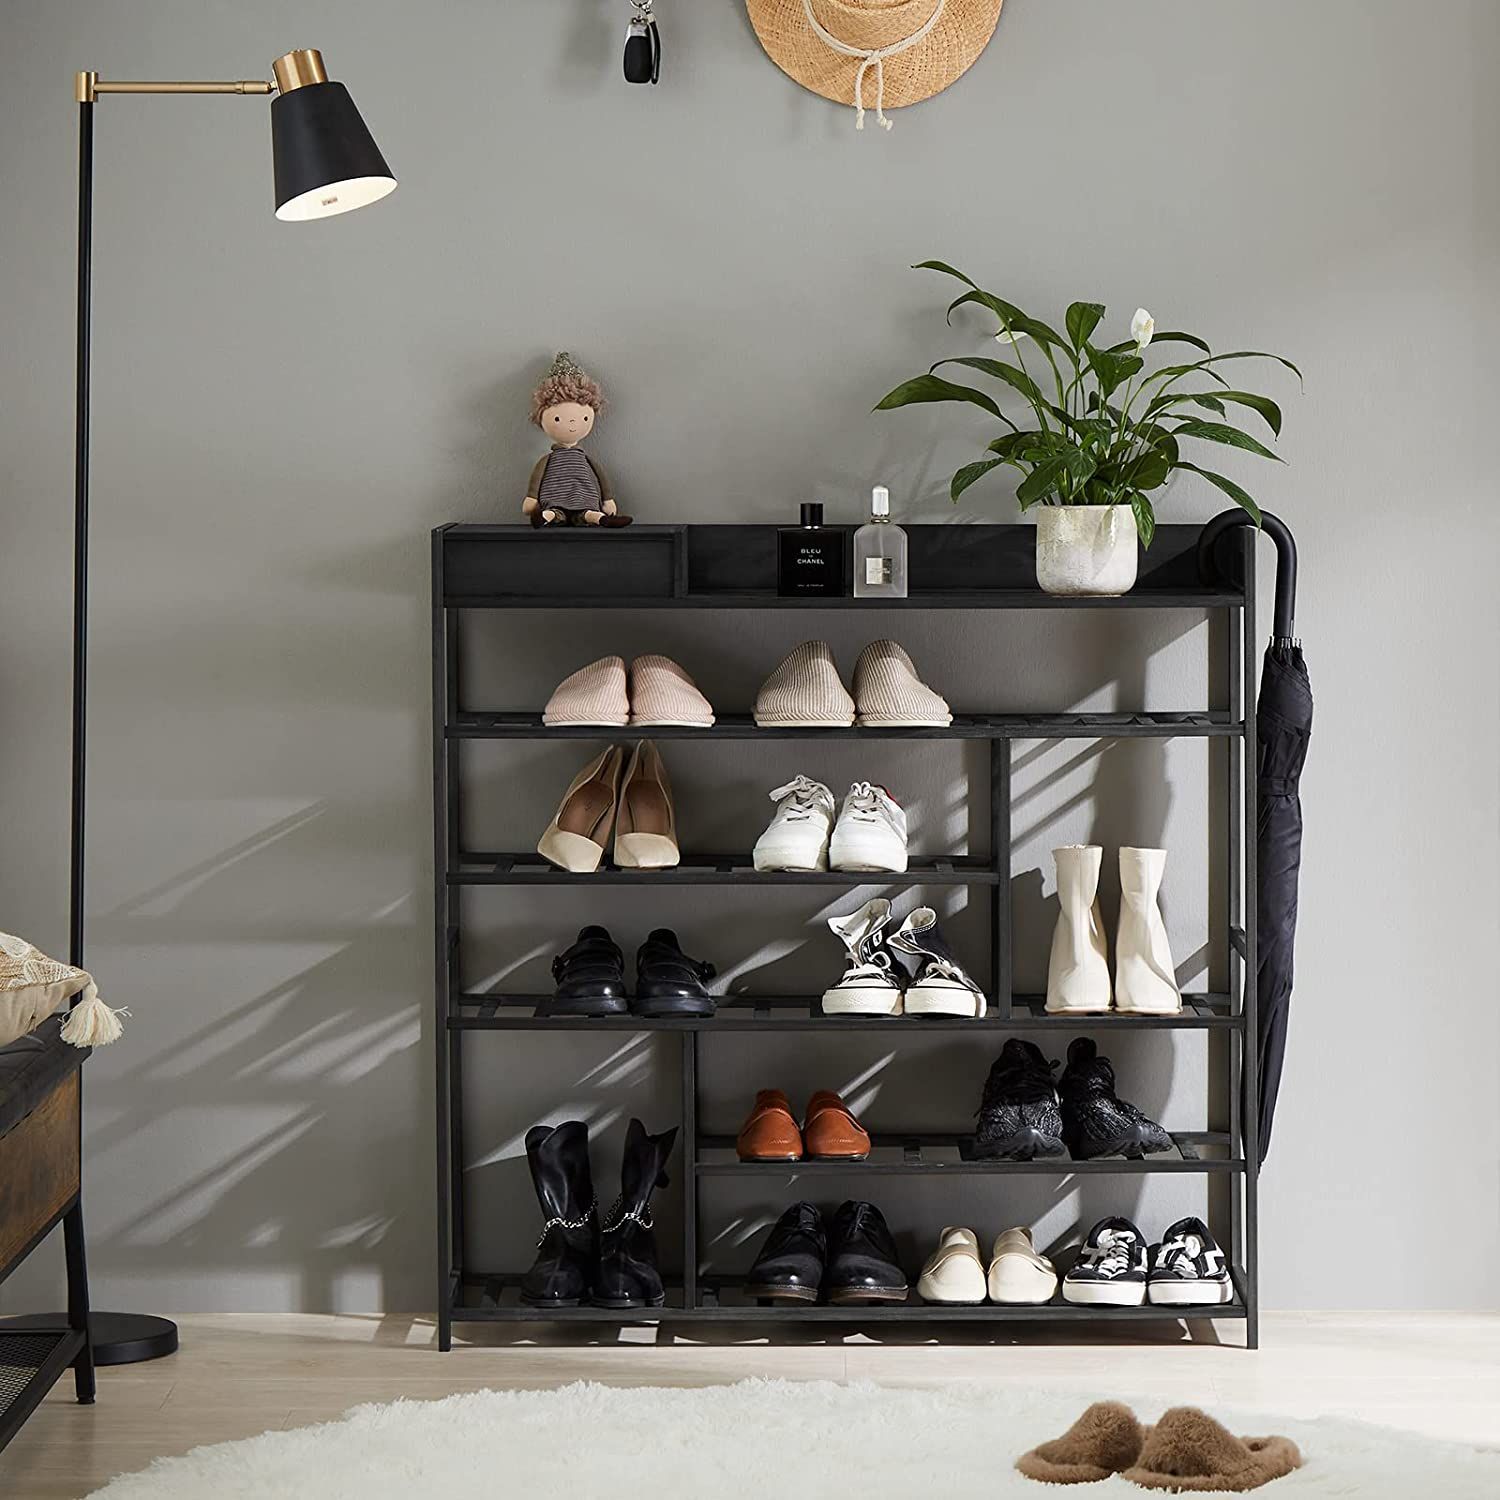 Shoe Storage Ideas - DIY Shoe Storage